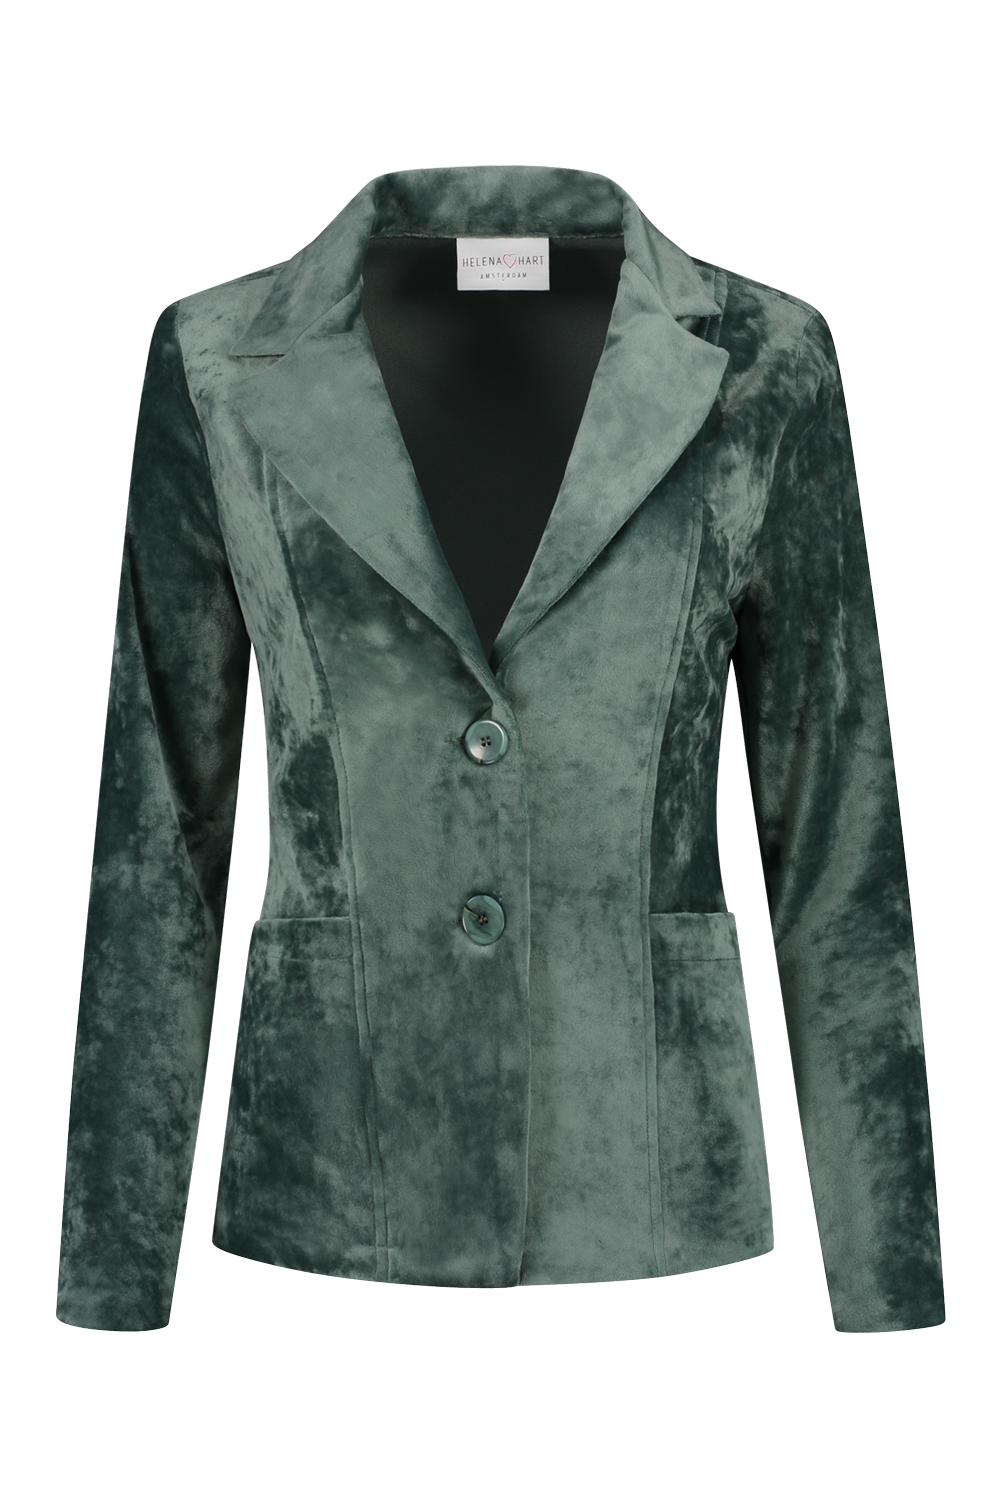 Helena Hart blazer velour emerald online kopen bij Fier Mode. Uni-emerald